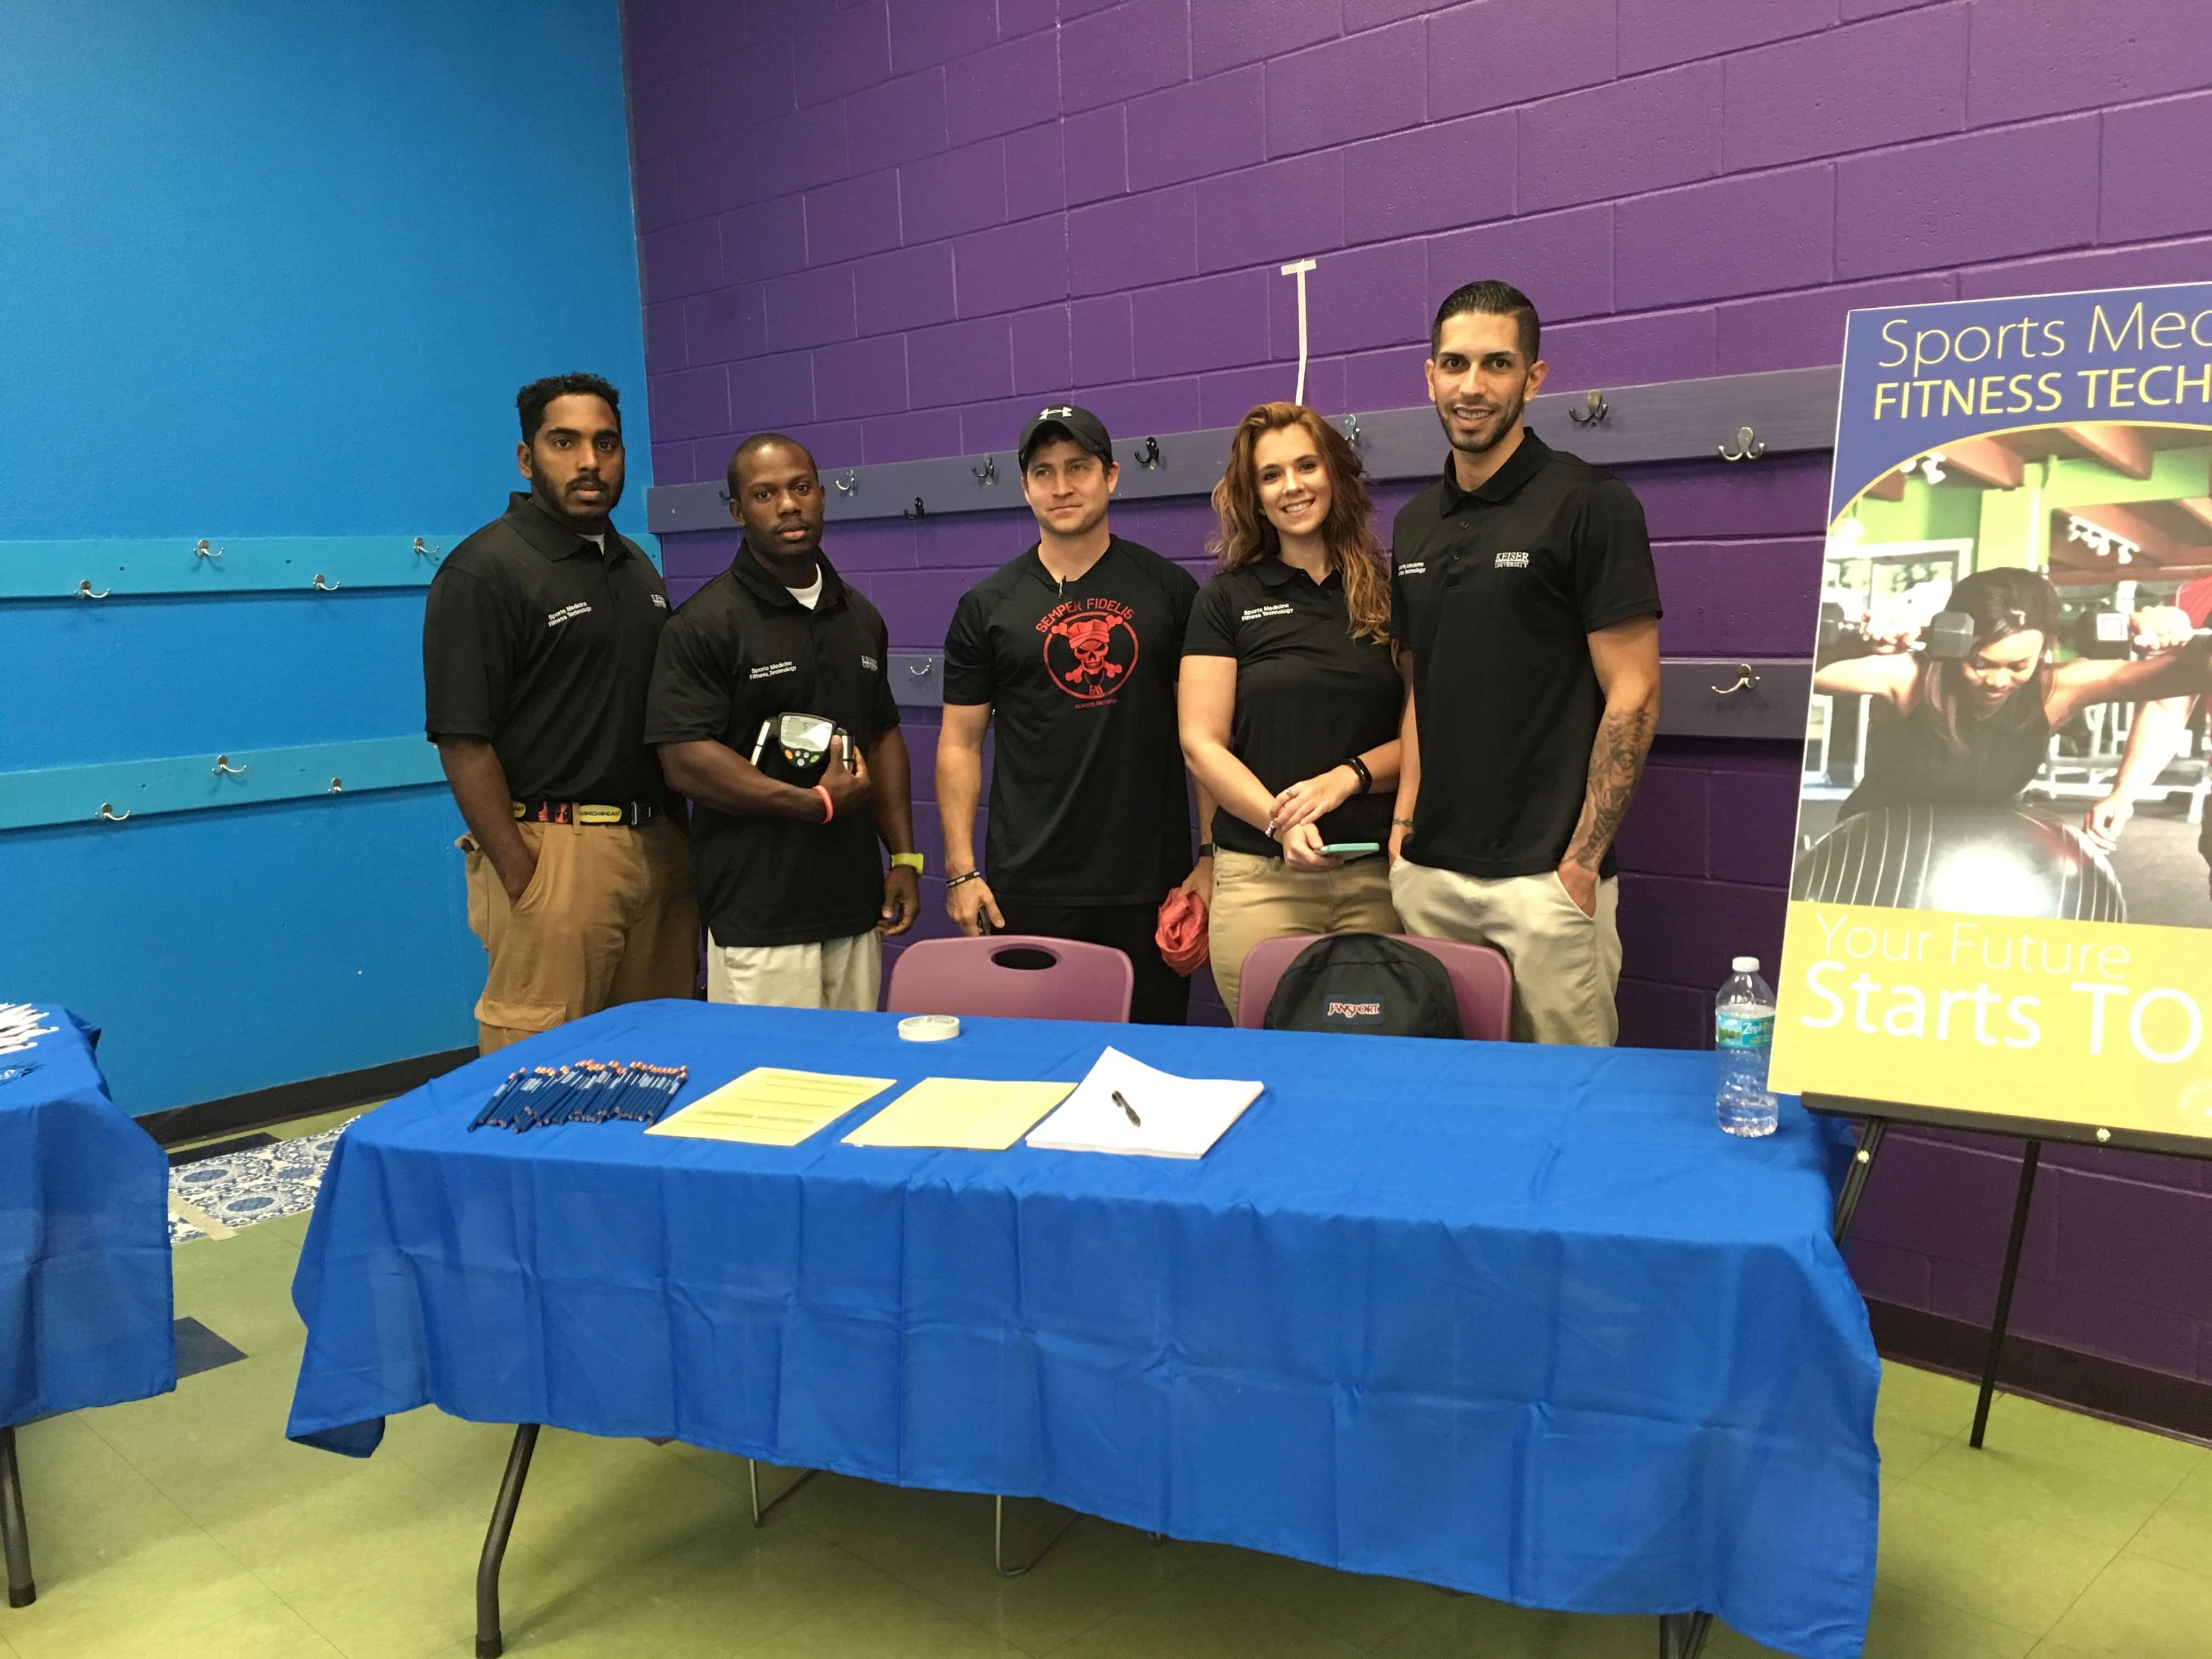 Tampa’s Sports Medicine Fitness Technology Program Visits the YMCA